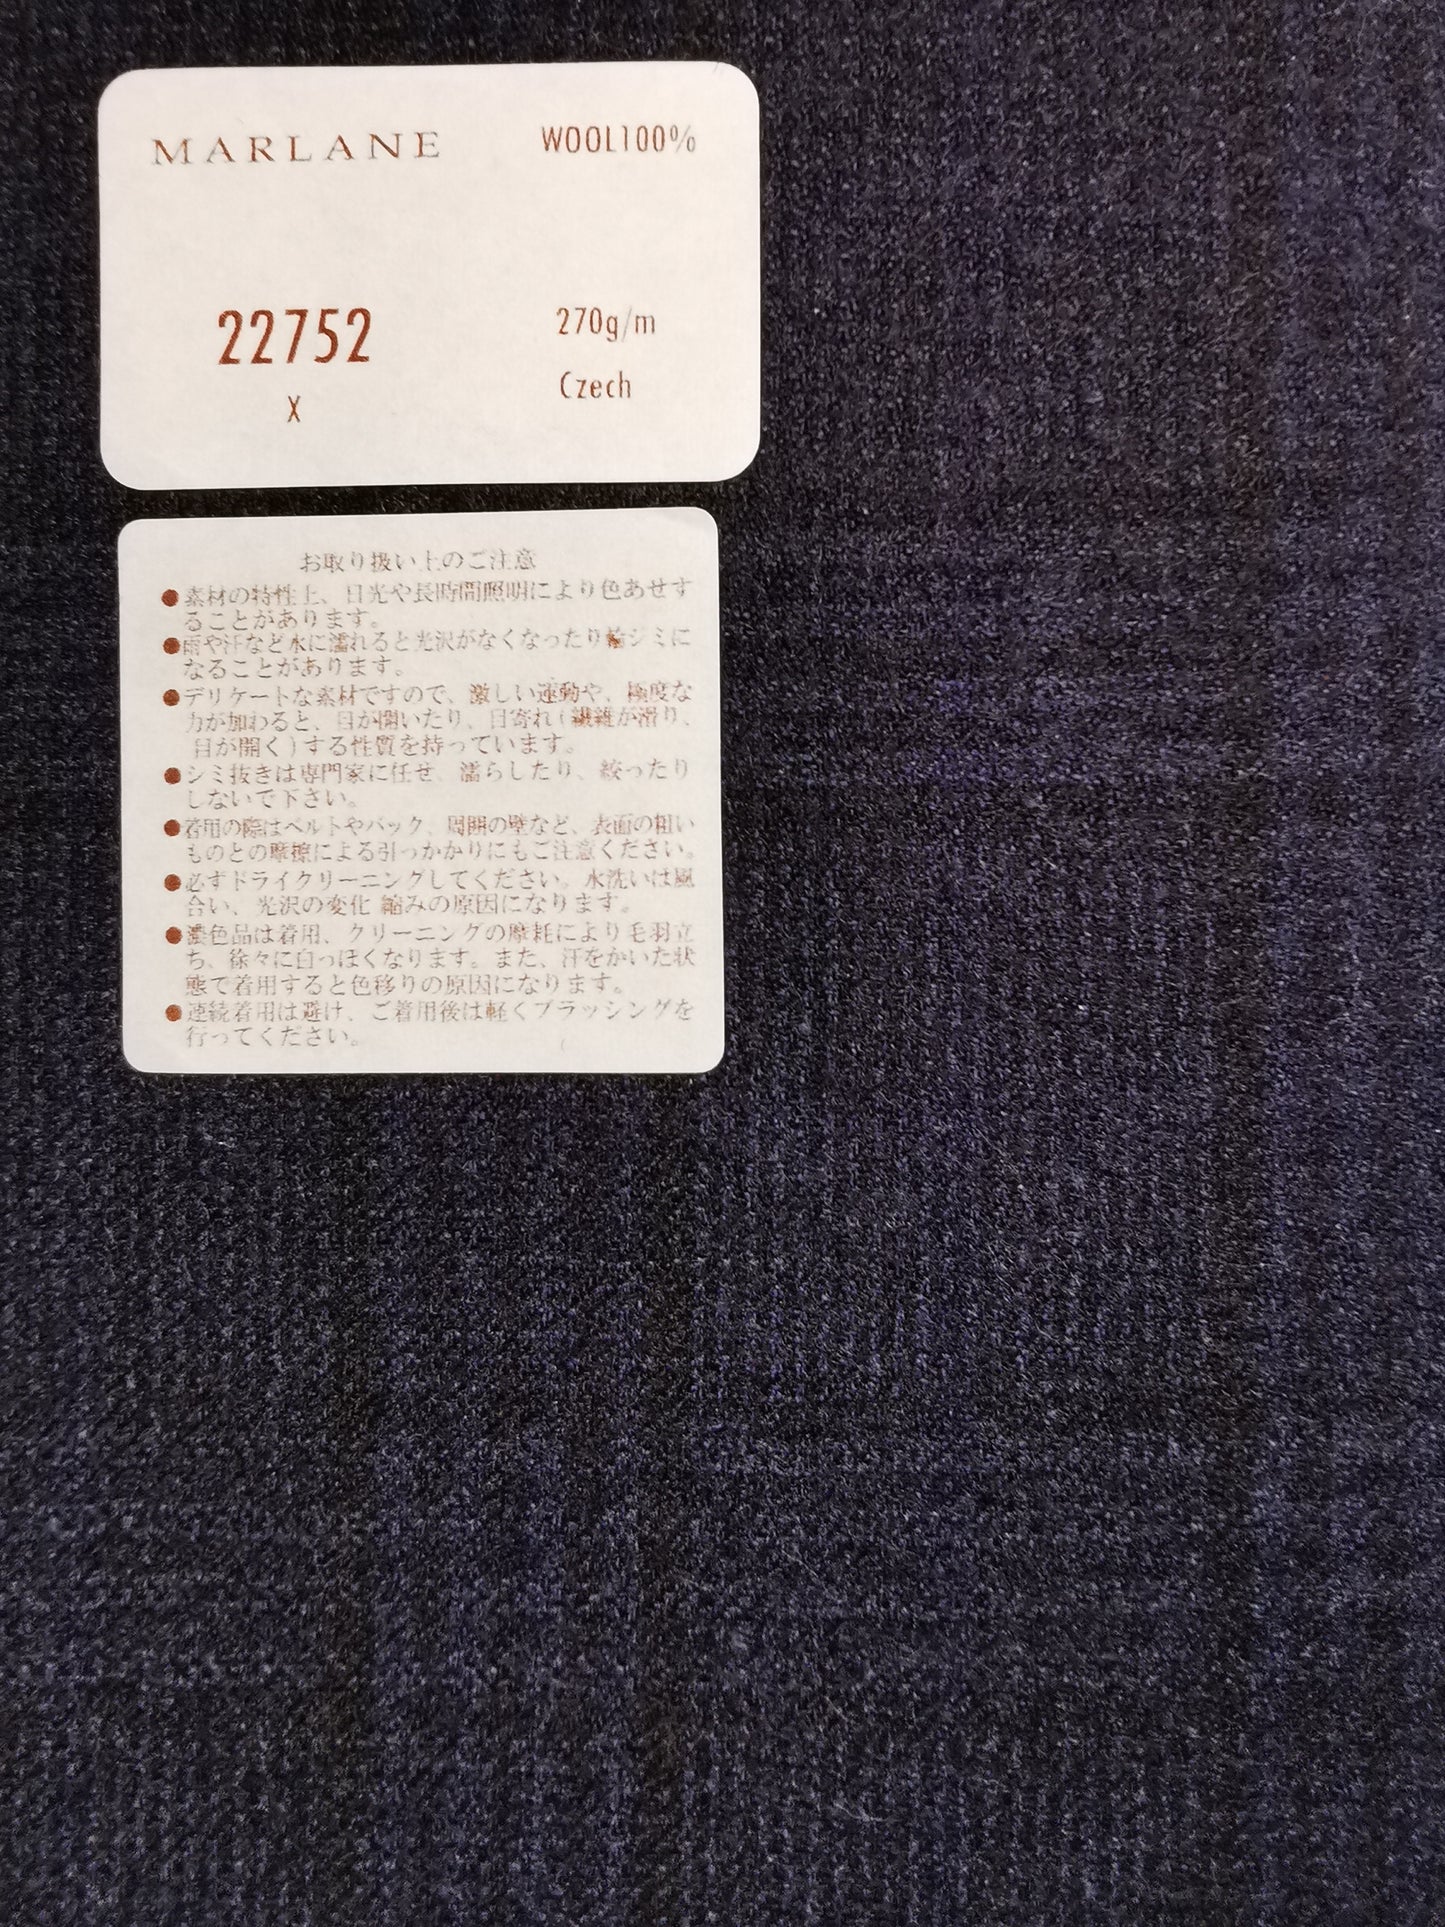 Brand : MARLANE Textile ID : 22752